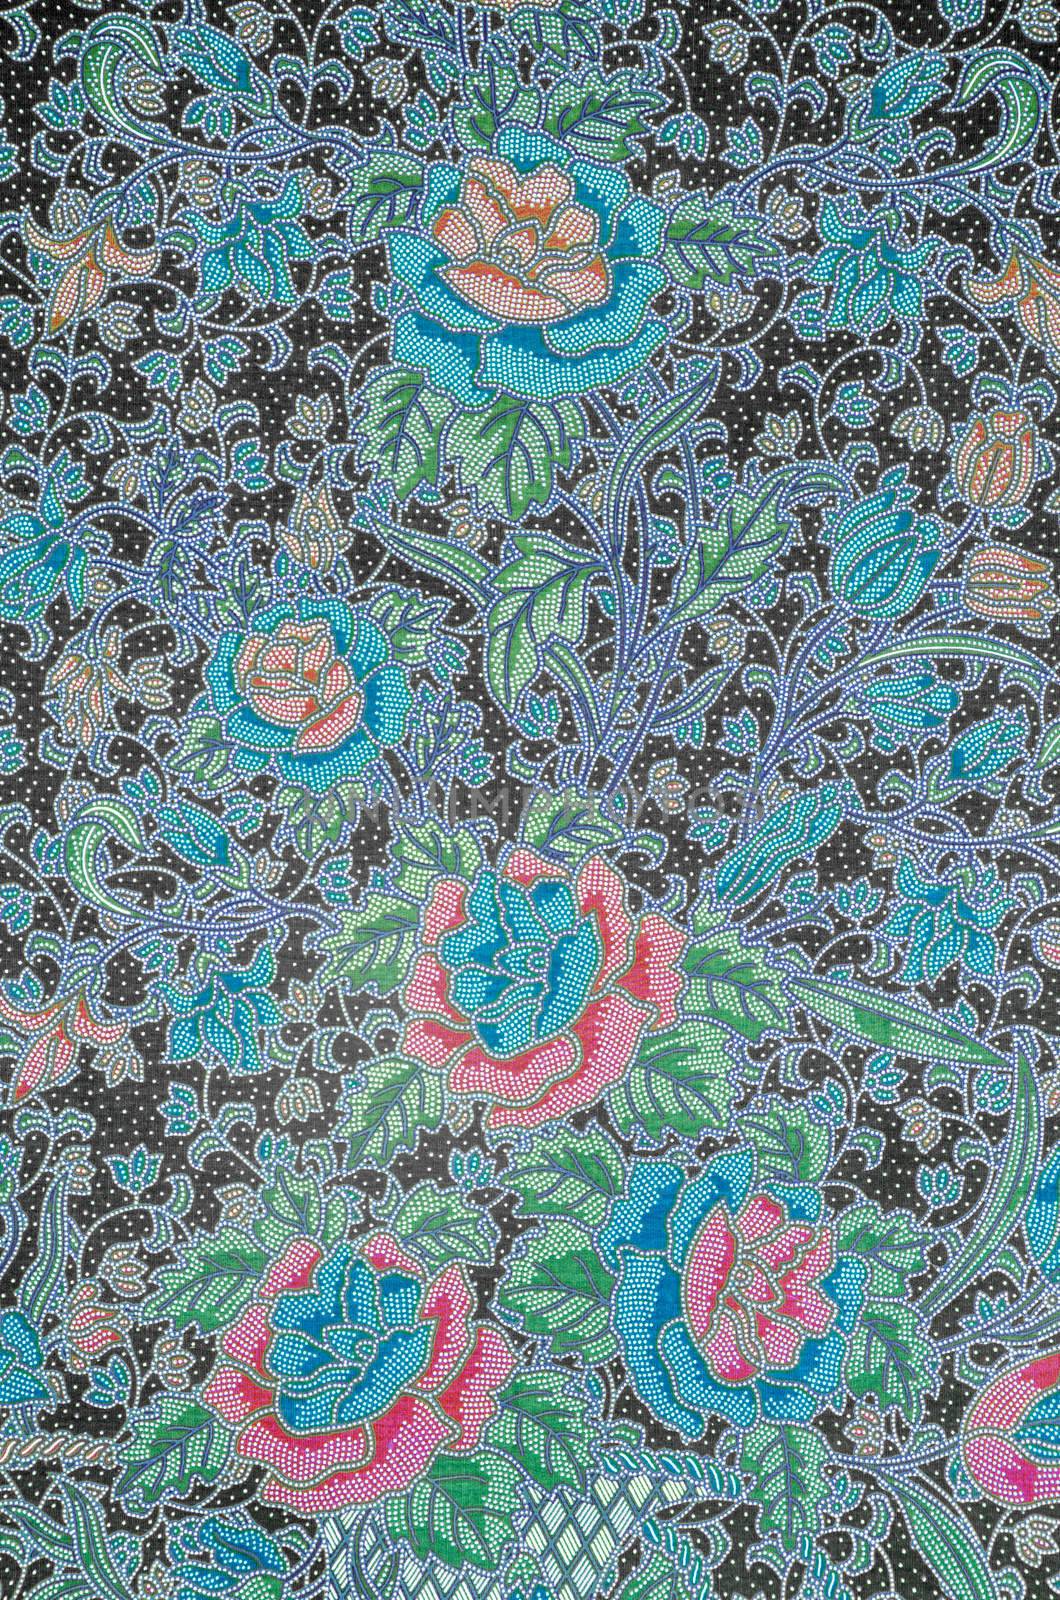 Colorful batik cloth fabric background by Gamjai